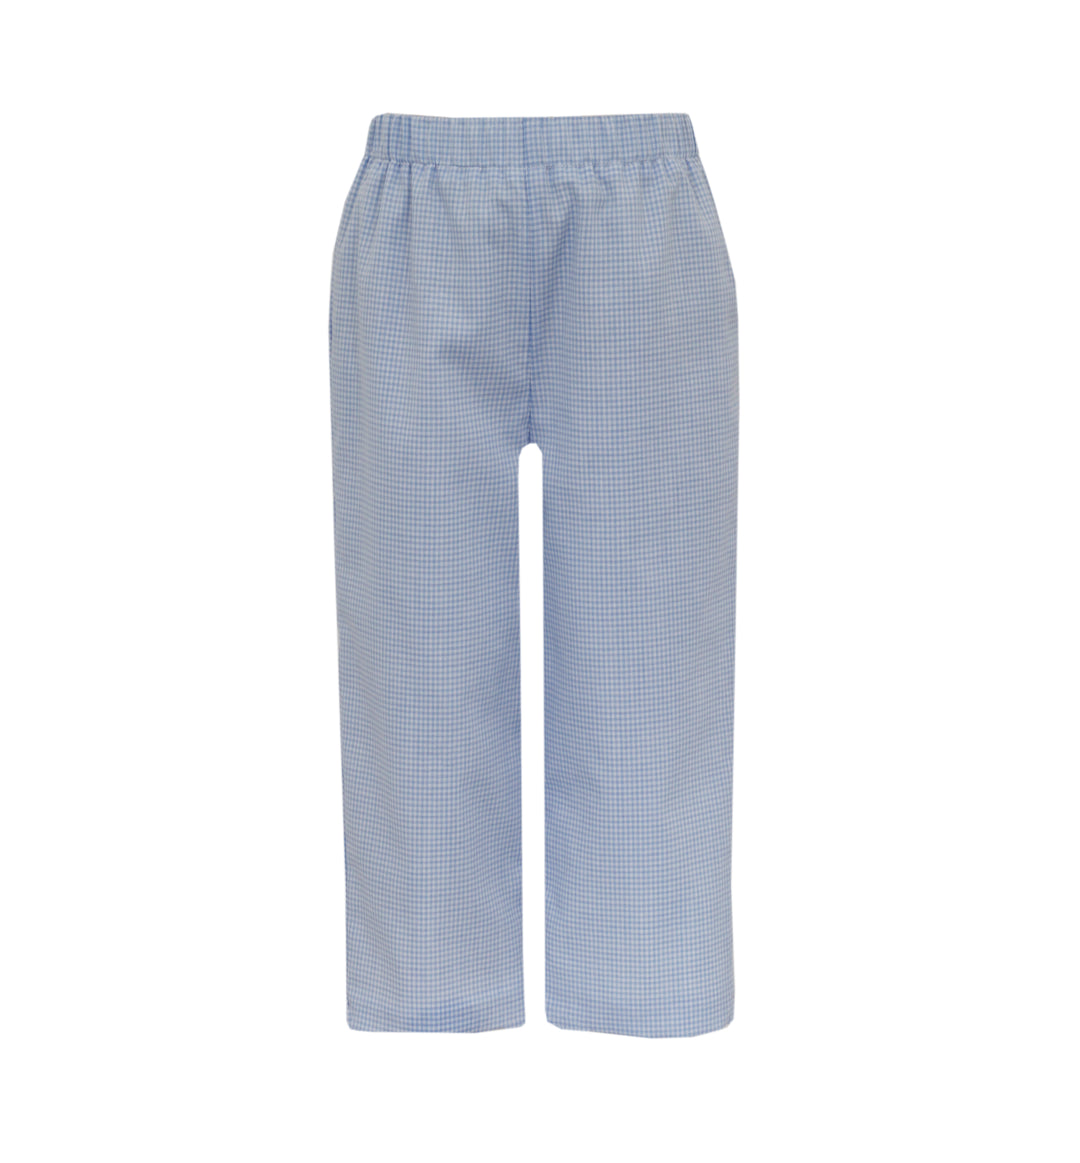 Light blue gingham pants